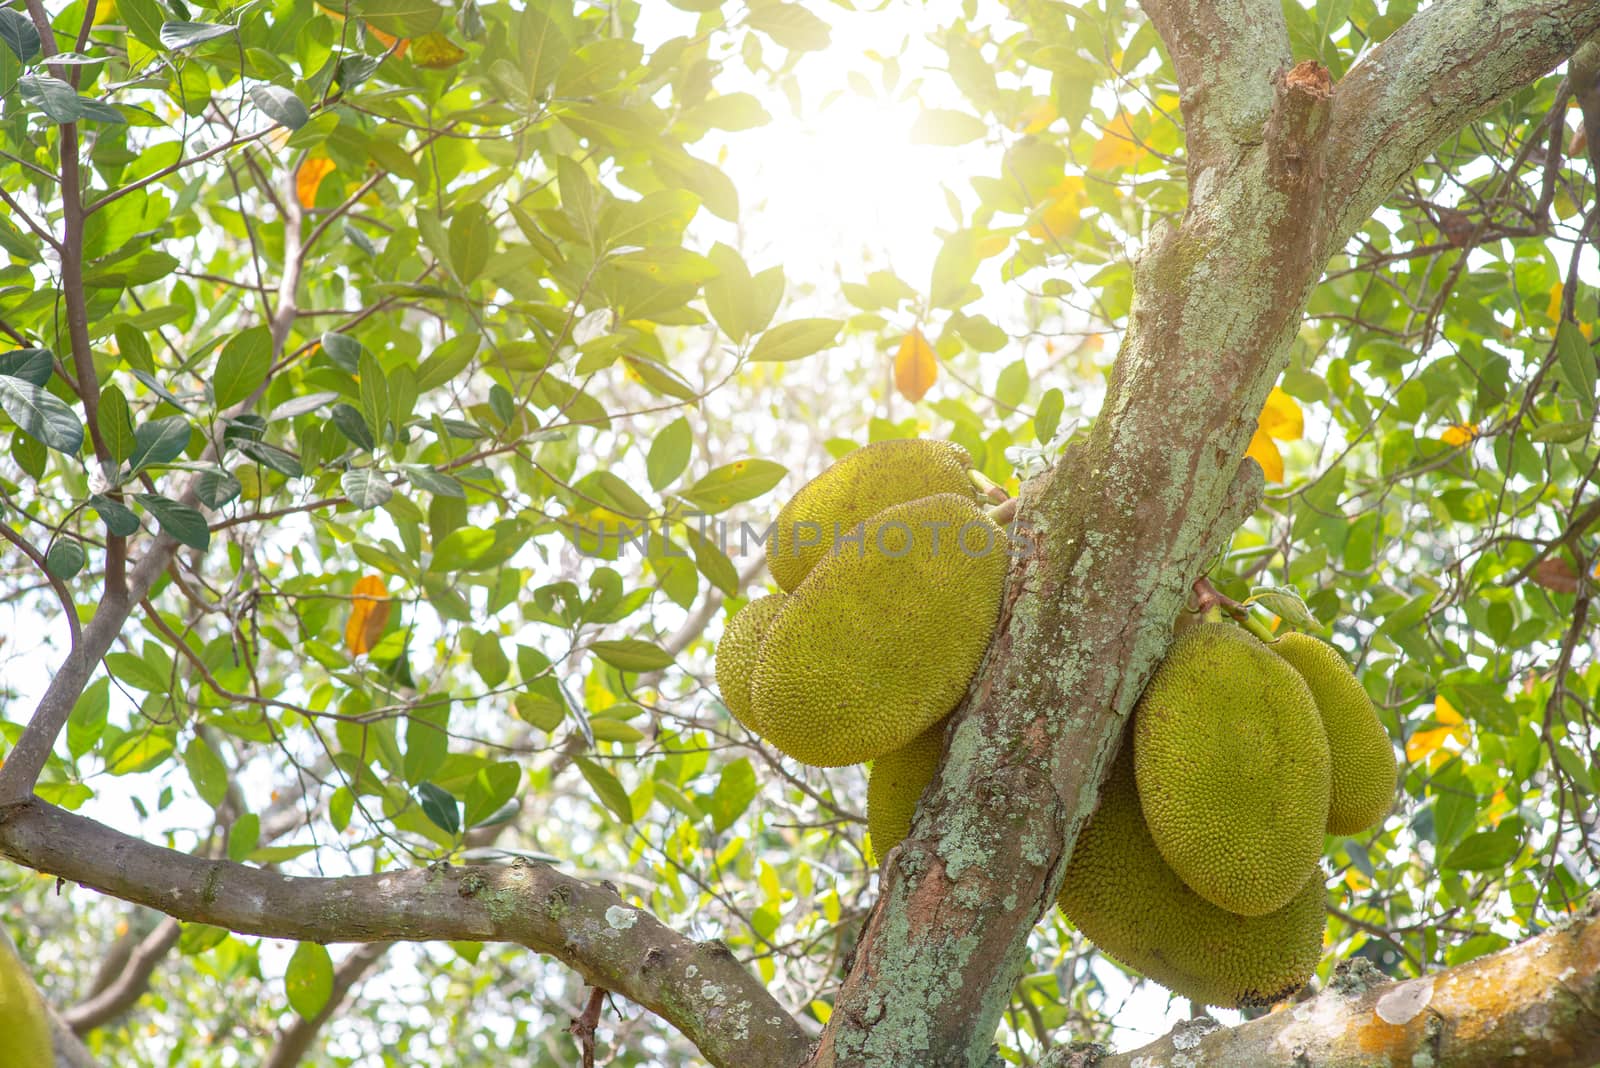 Jackfruit is hanging on the tree.